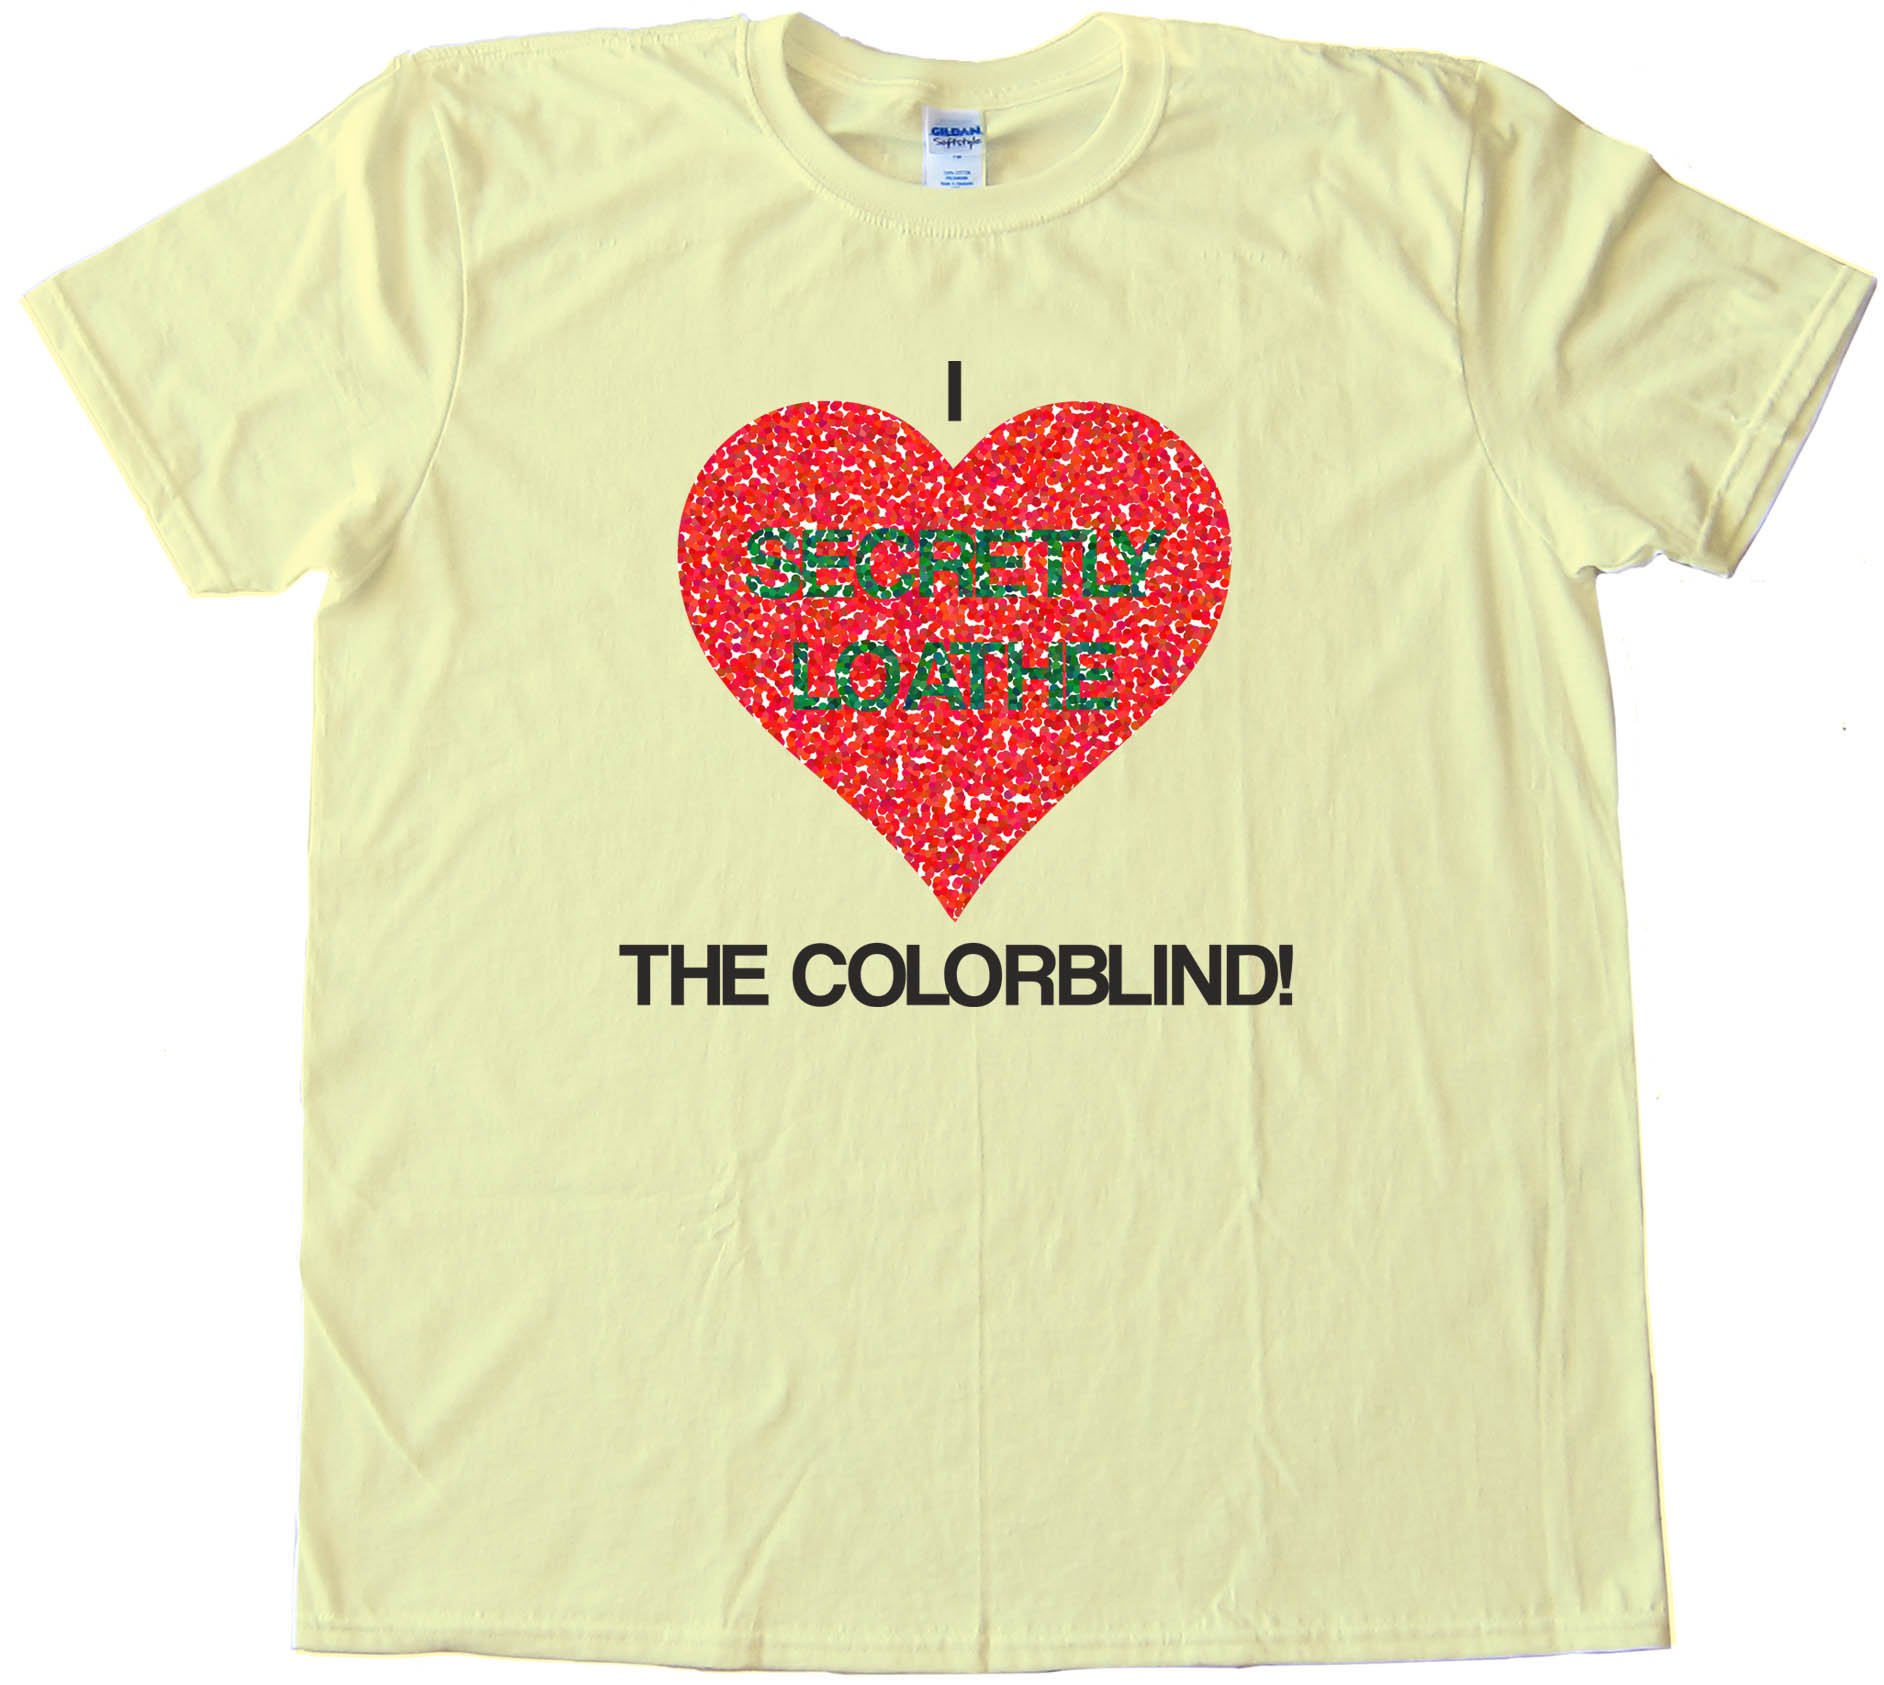 I Secretly Loathe The Colorblind - Tee Shirt